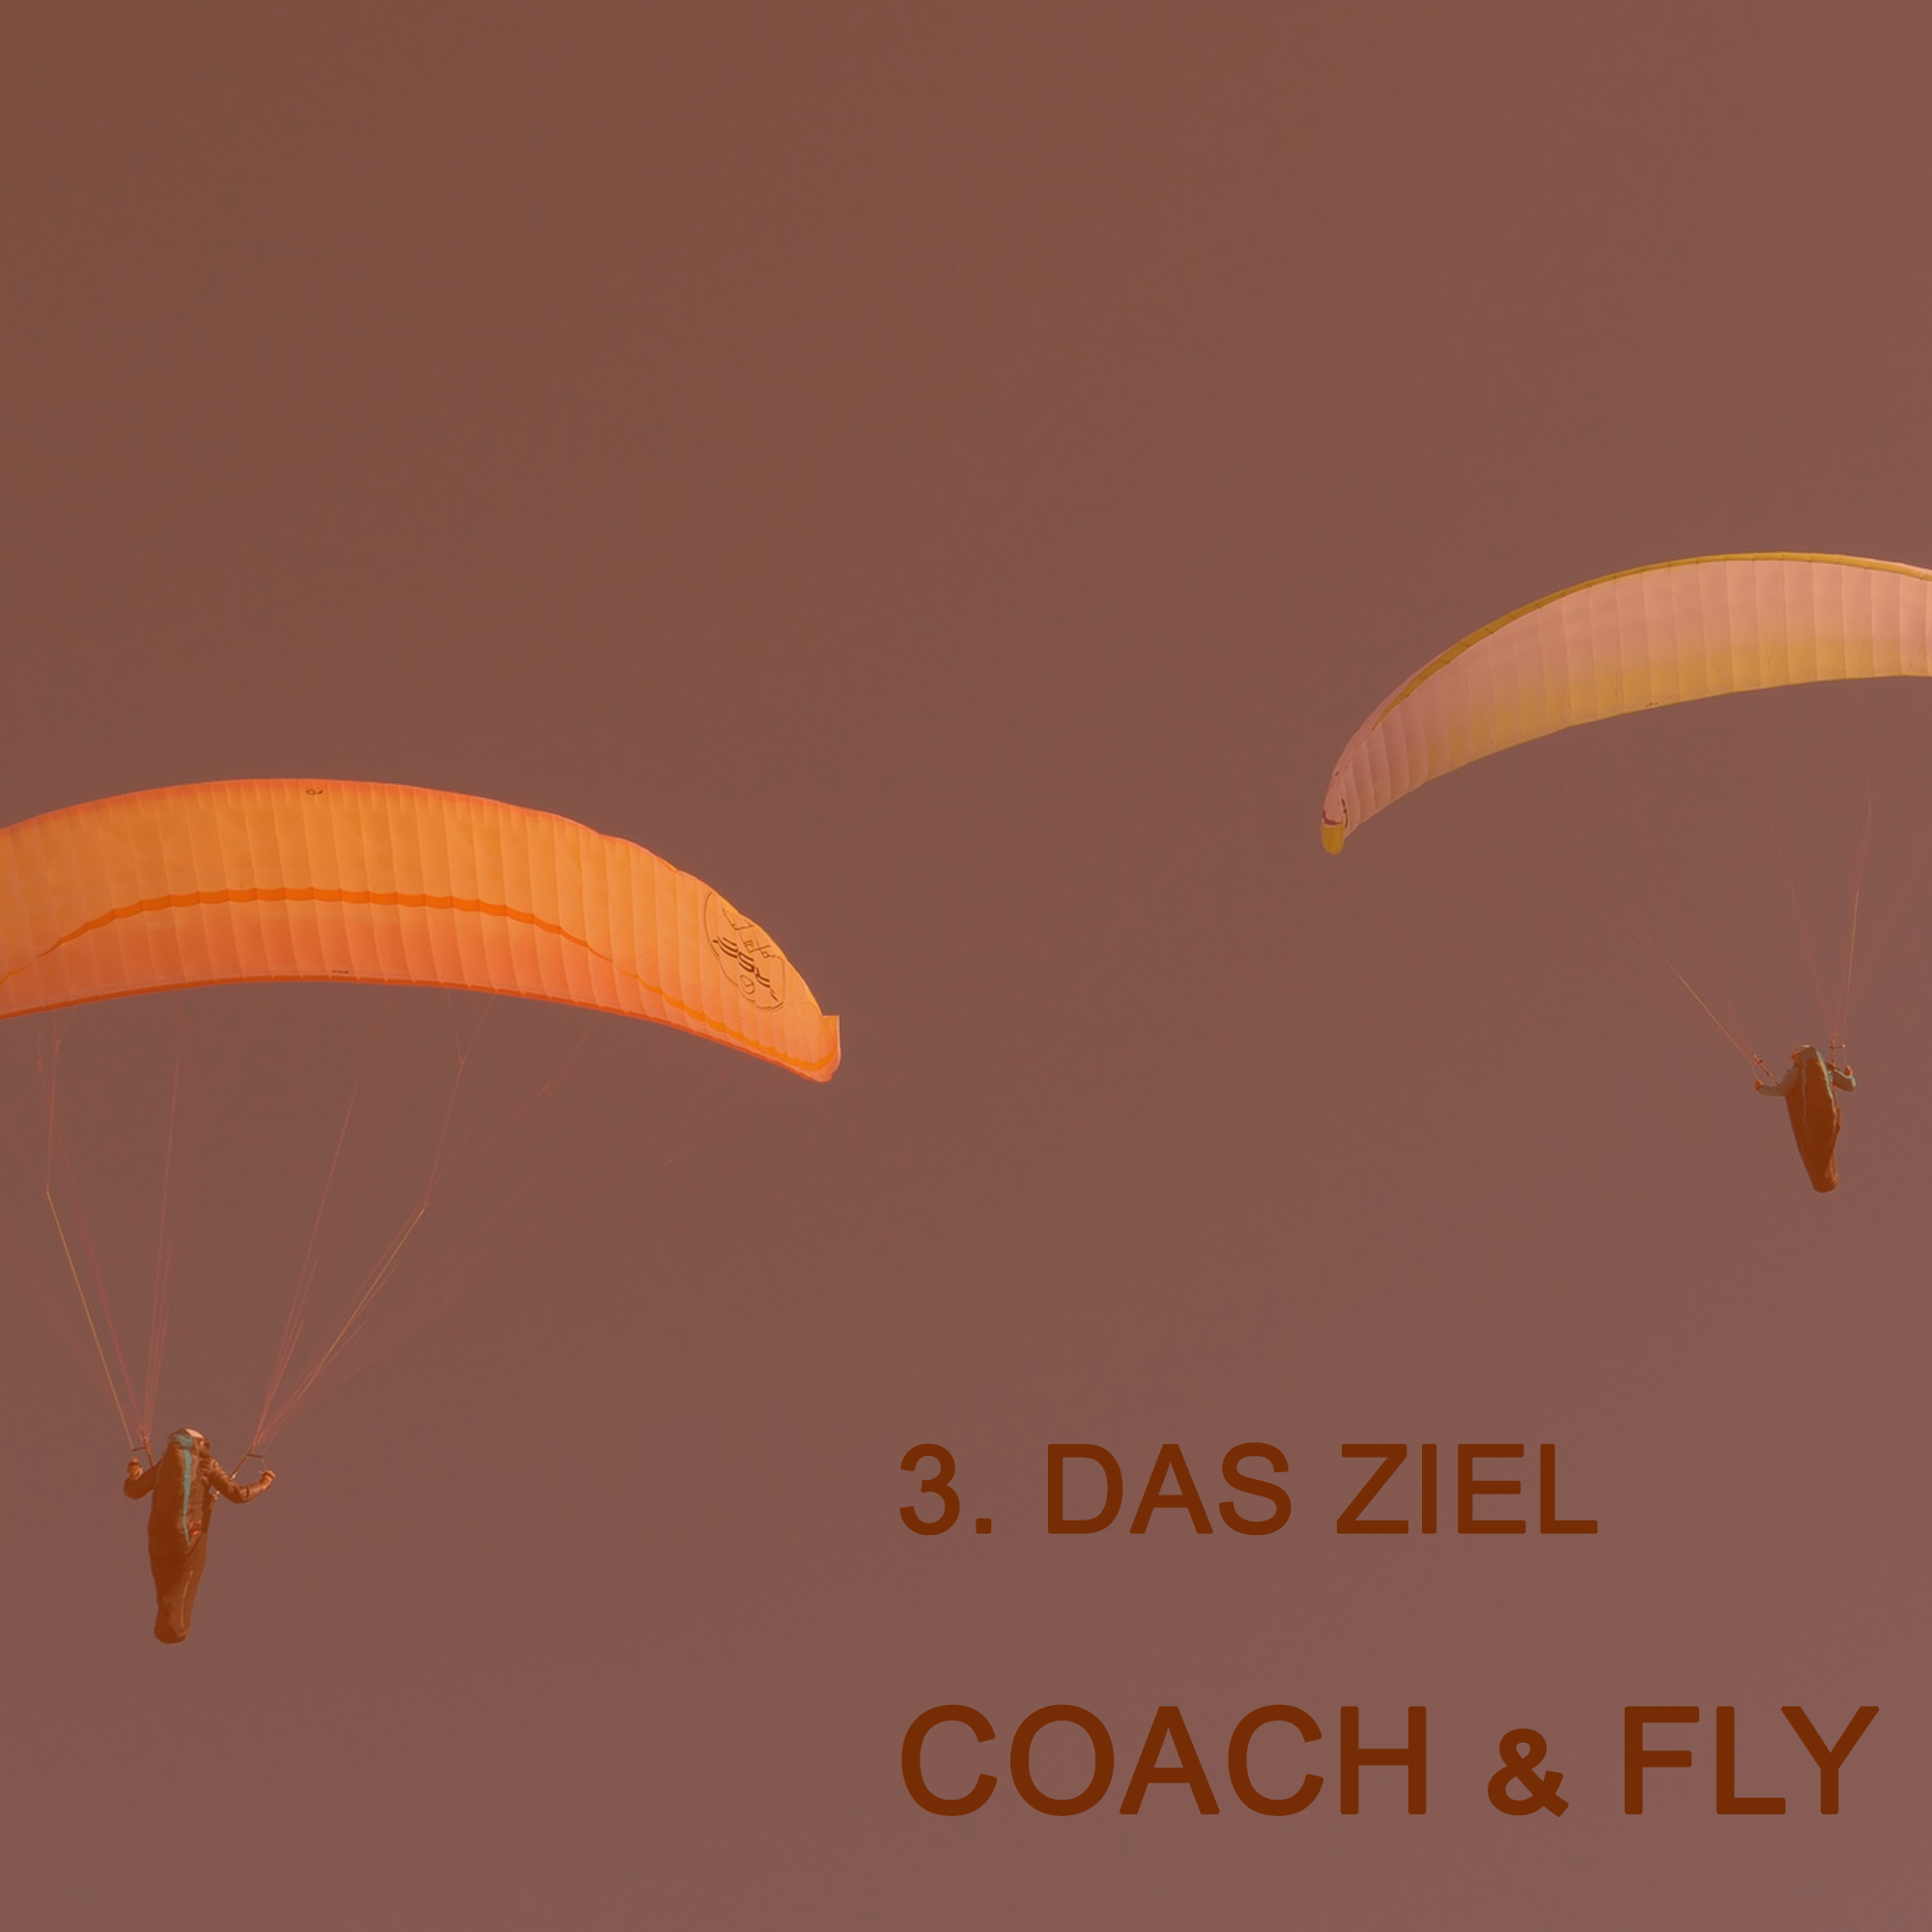 3. DAS ZIEL - COACH & FLY - orange.png